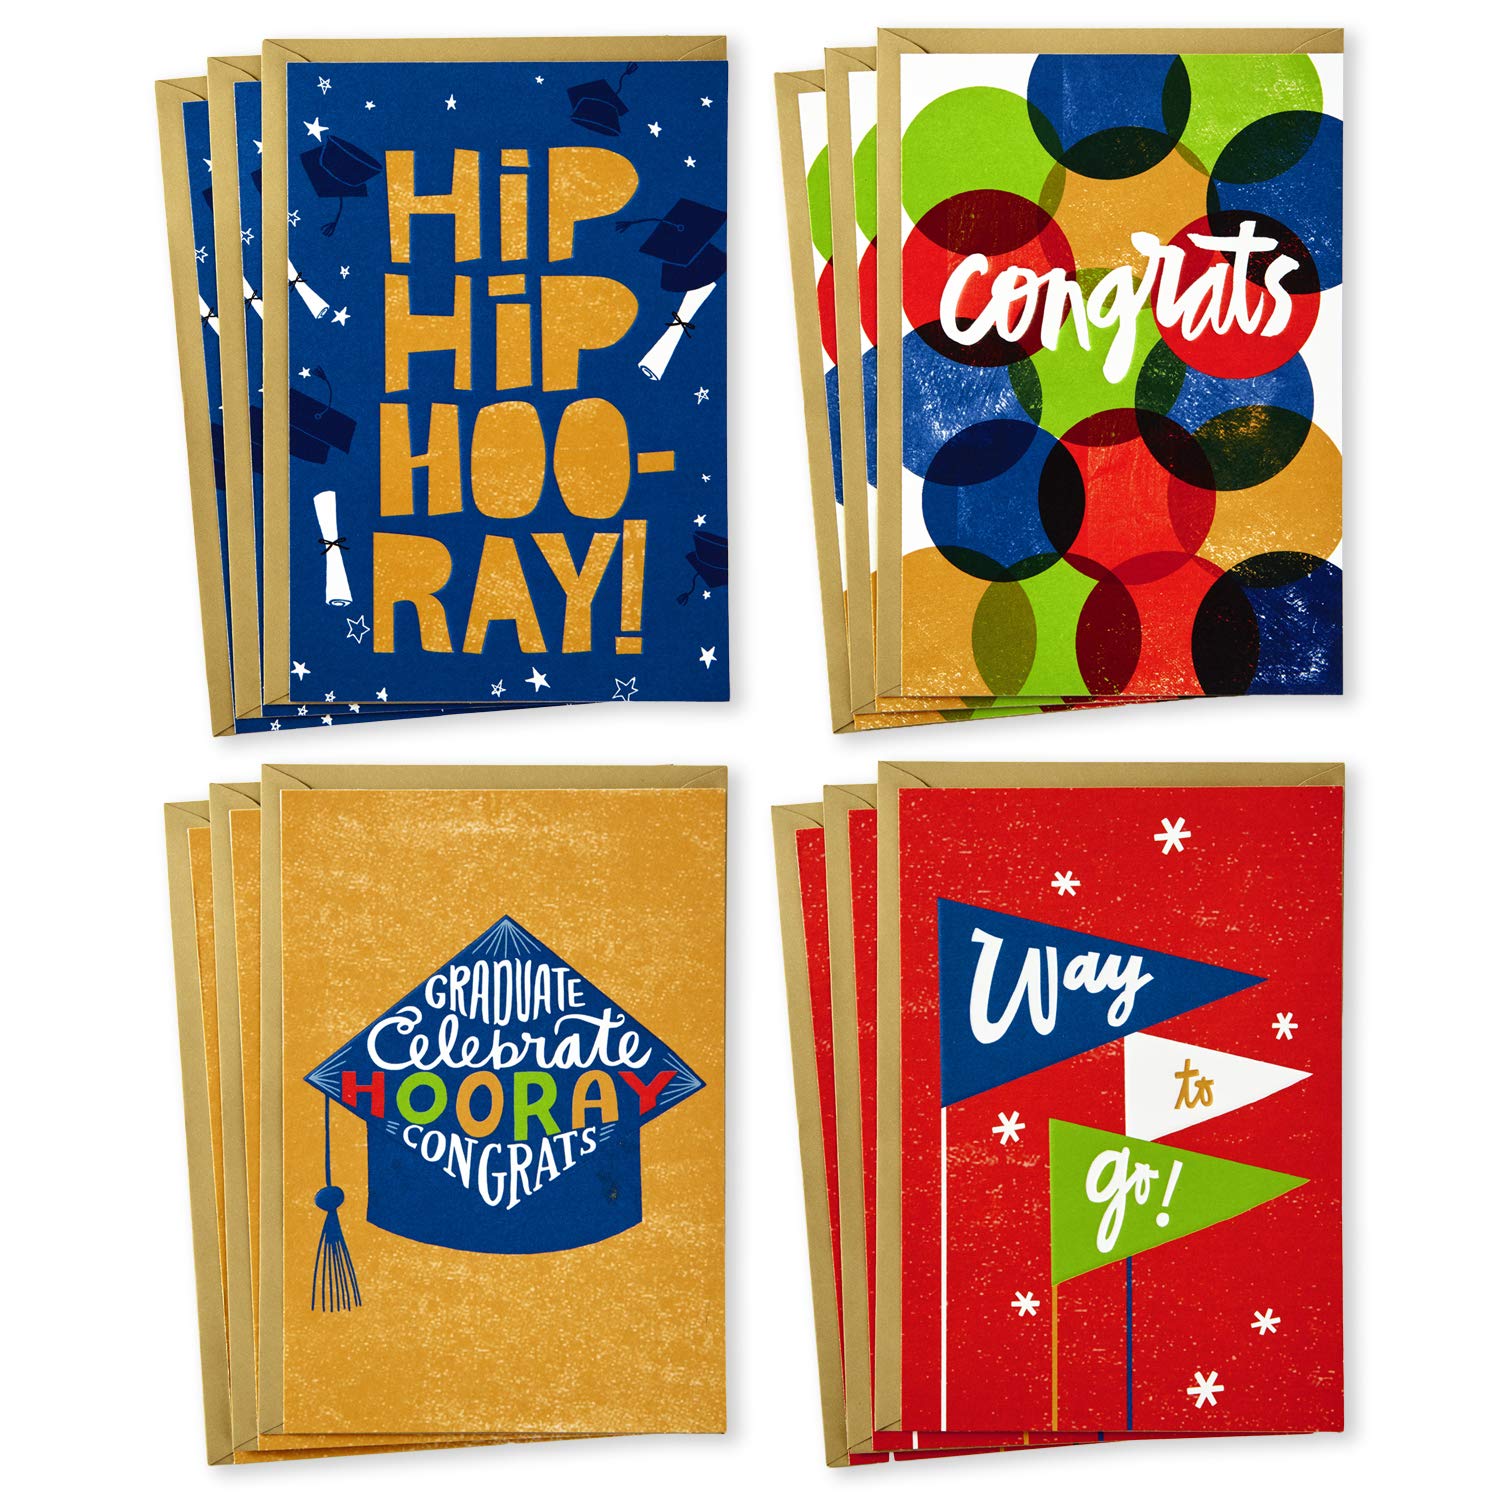 12-Pack Hallmark Graduation Cards (Congrats, Way to Go, Hip Hip Hooray, Grad Cap) $1.07 + Free Shipping w/ Prime or on $35+